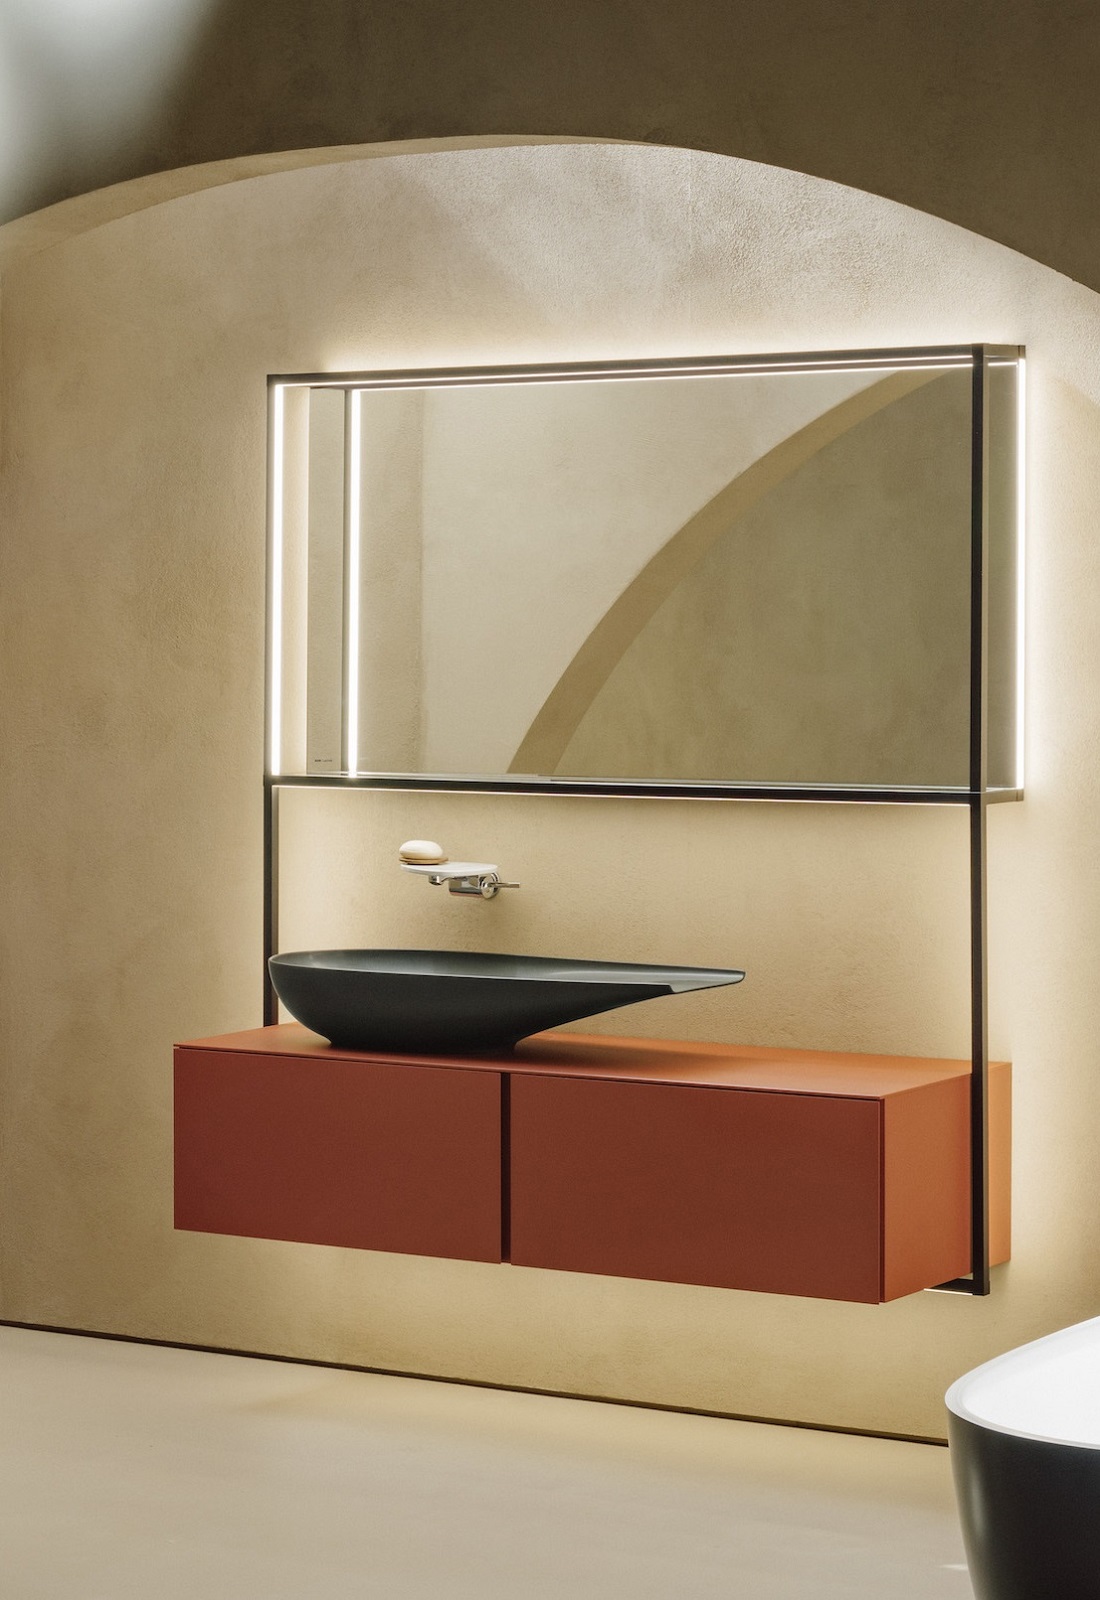 black basin on orange vanity unit with square mirror above